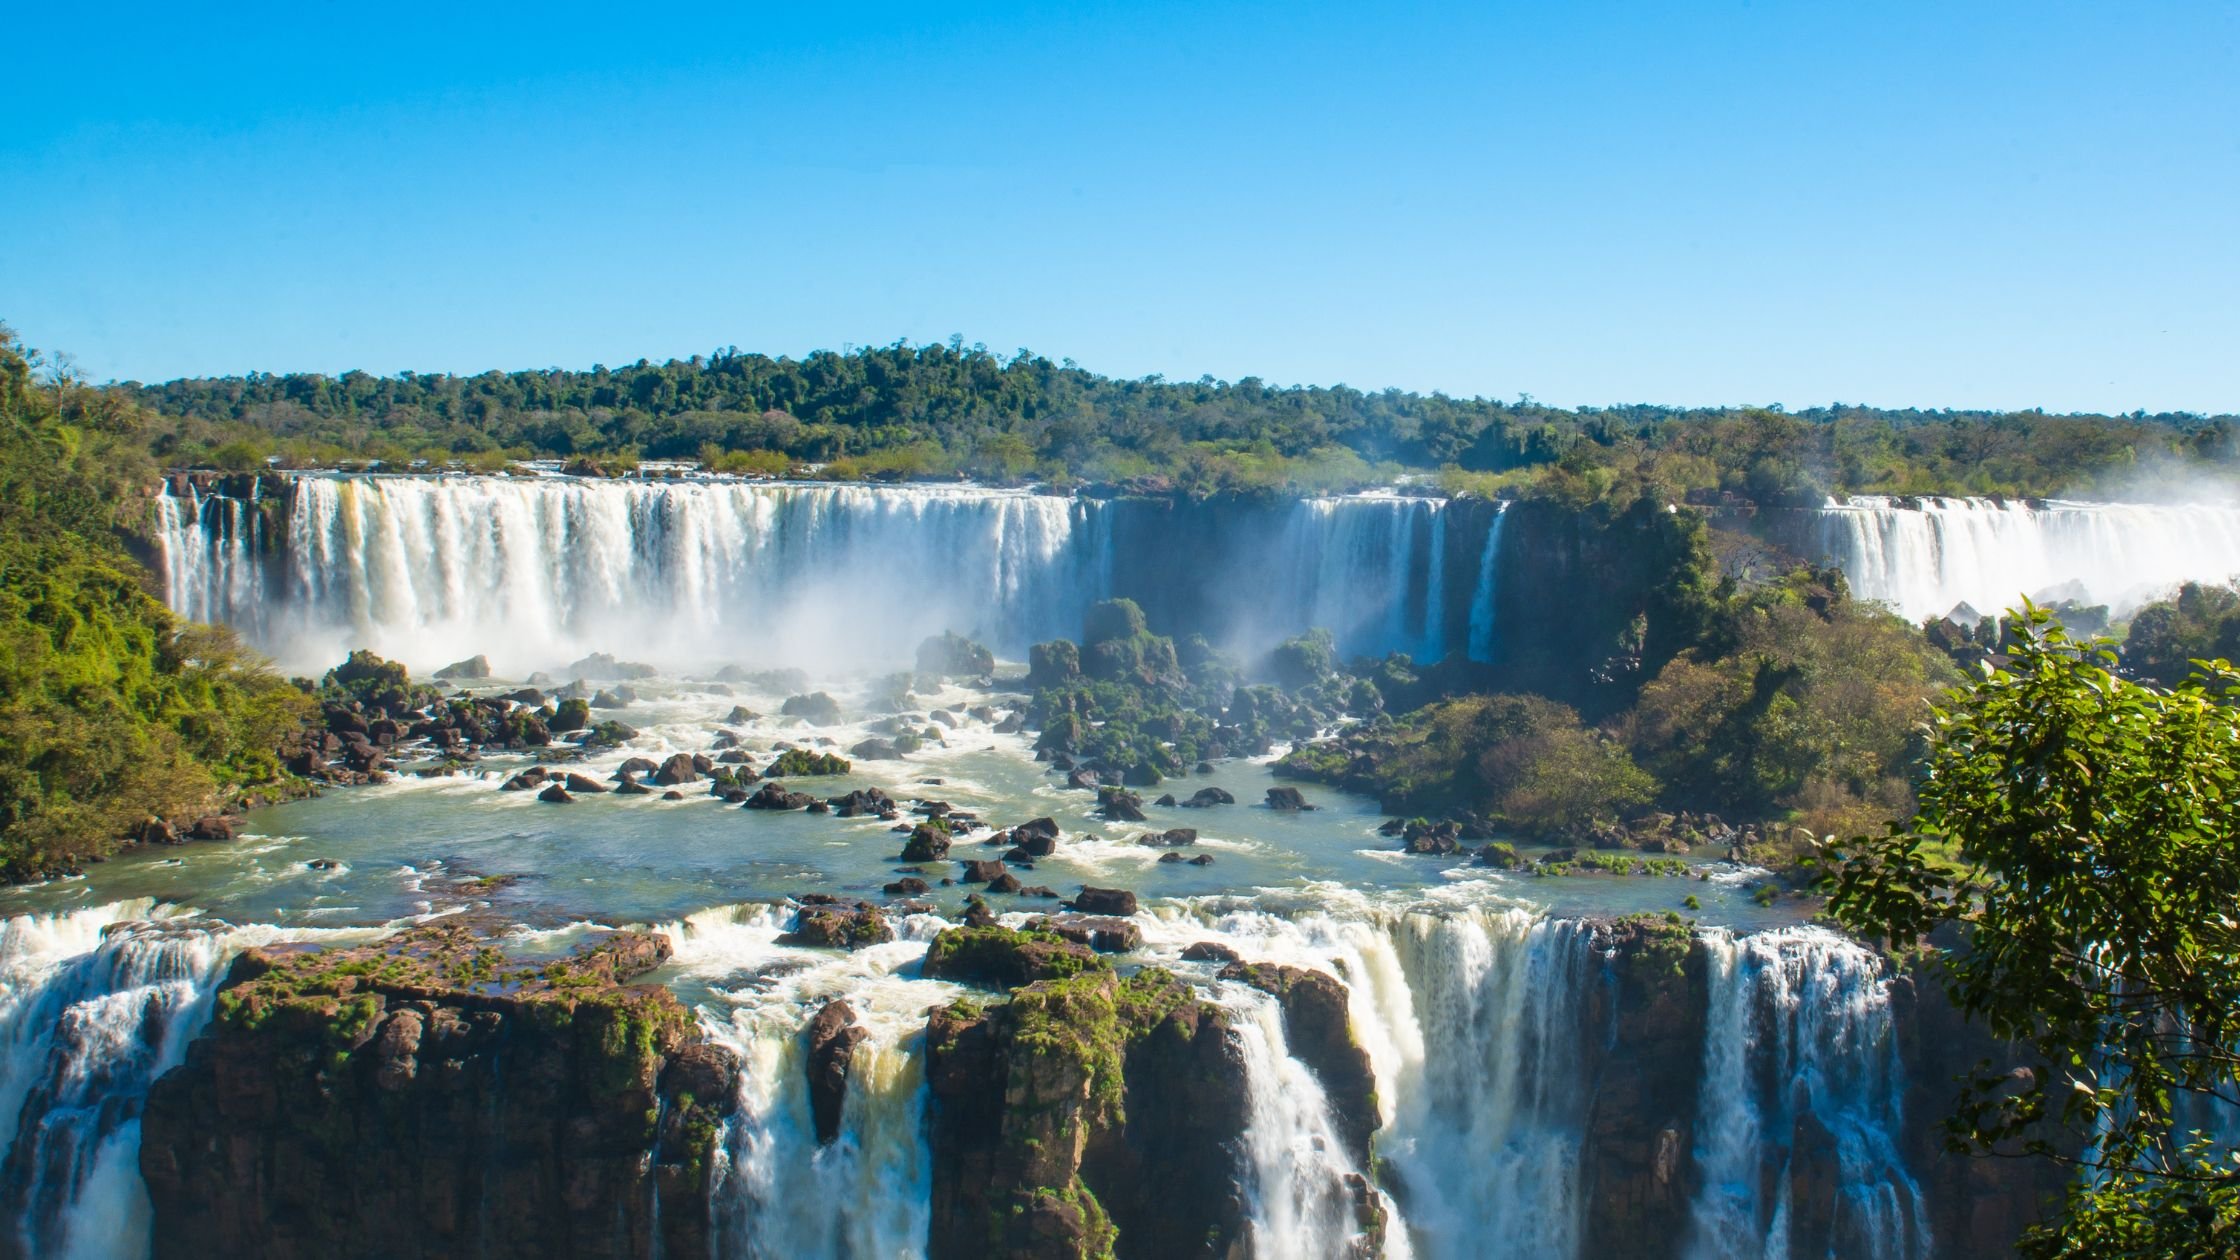 The Iguaçu Falls is a set of about 275 waterfalls on the Iguaçu River